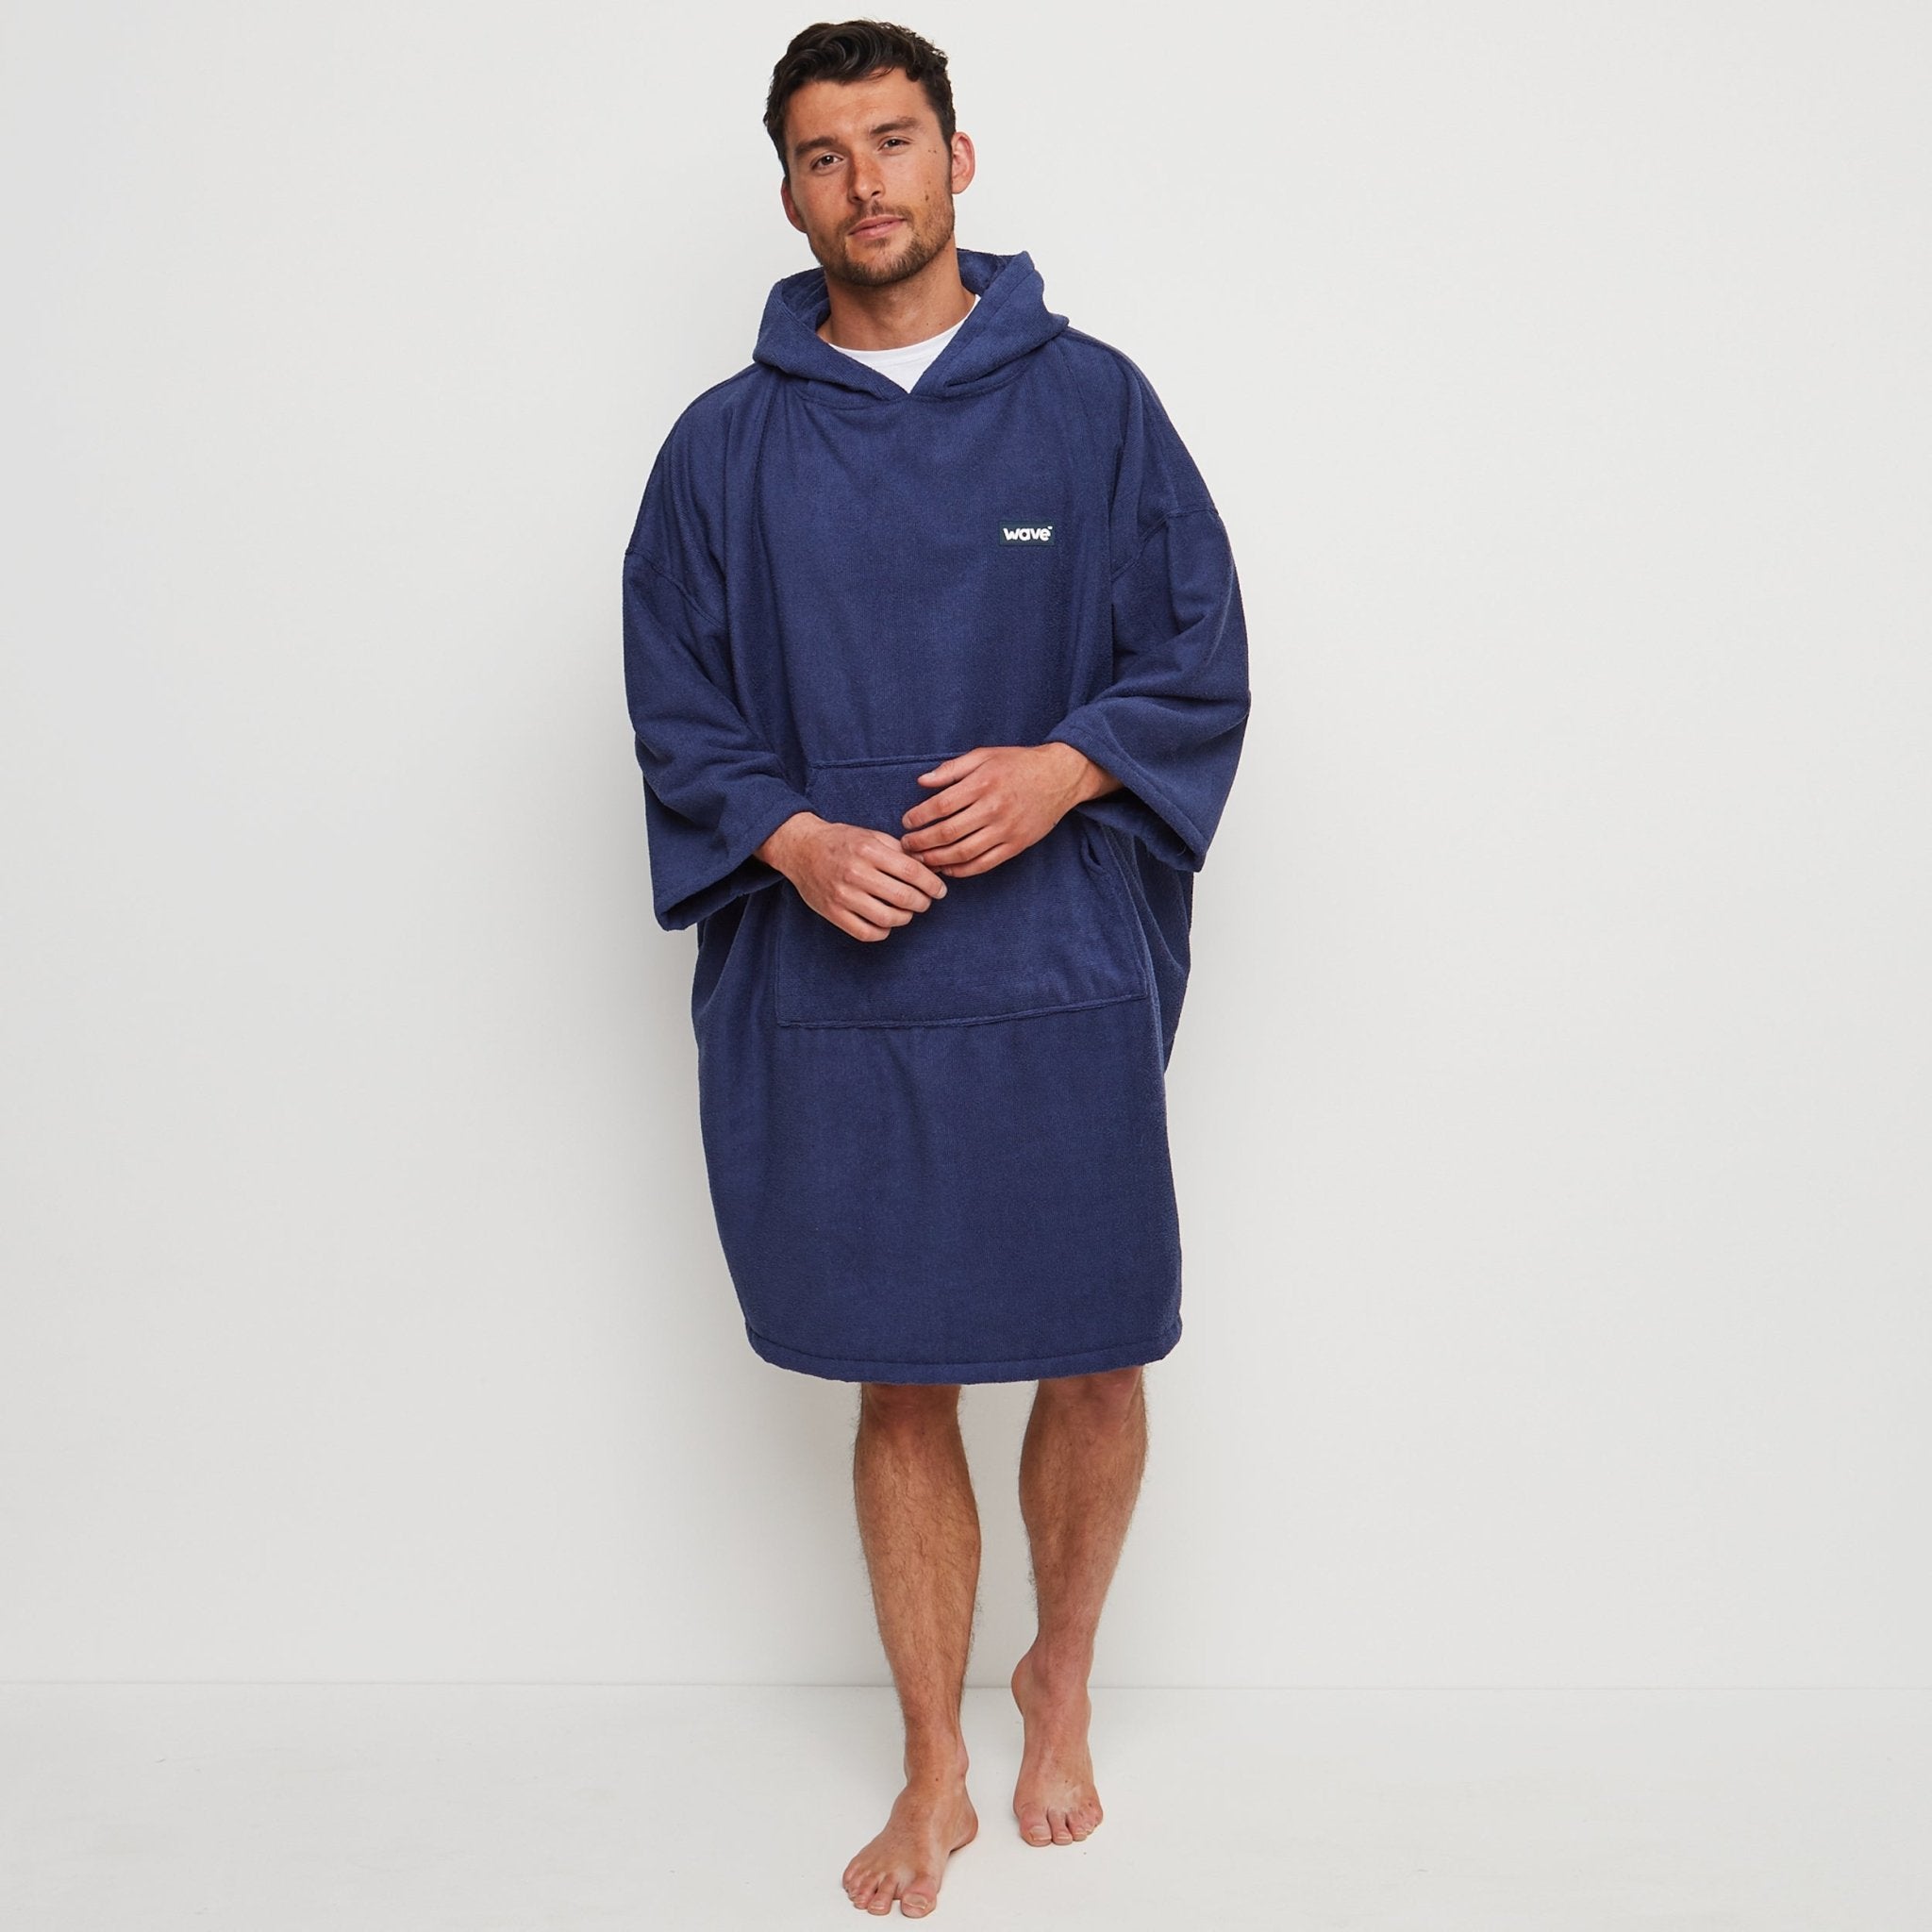 Towel Robe | Royal Blue - Wave Spas Inflatable, foam Hot Tubs